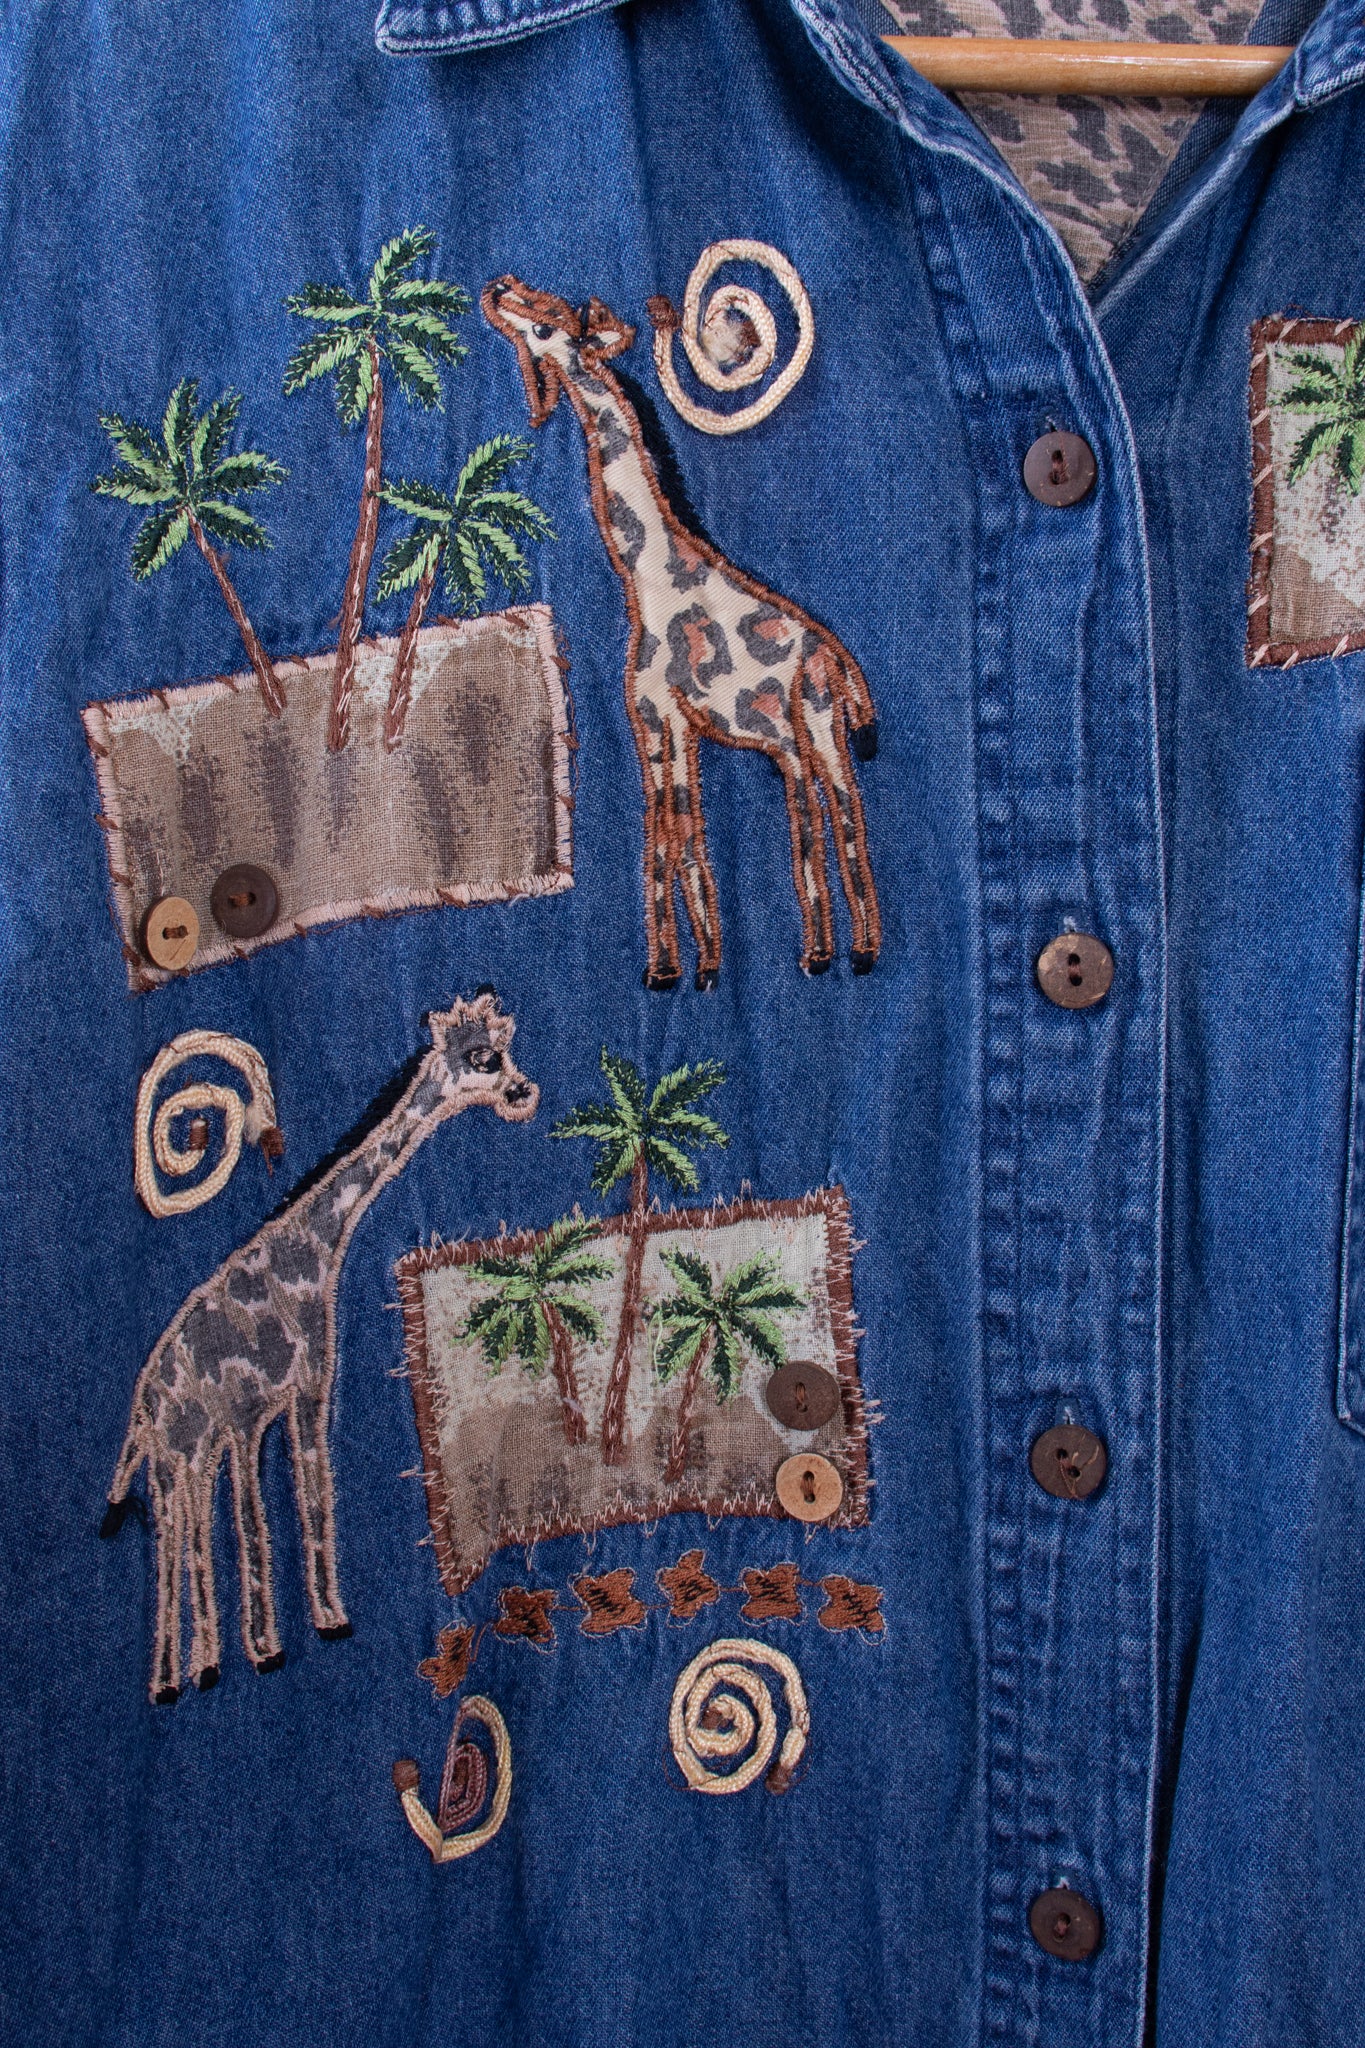 New Directions Safari Giraffes Embroidered Denim Blouse